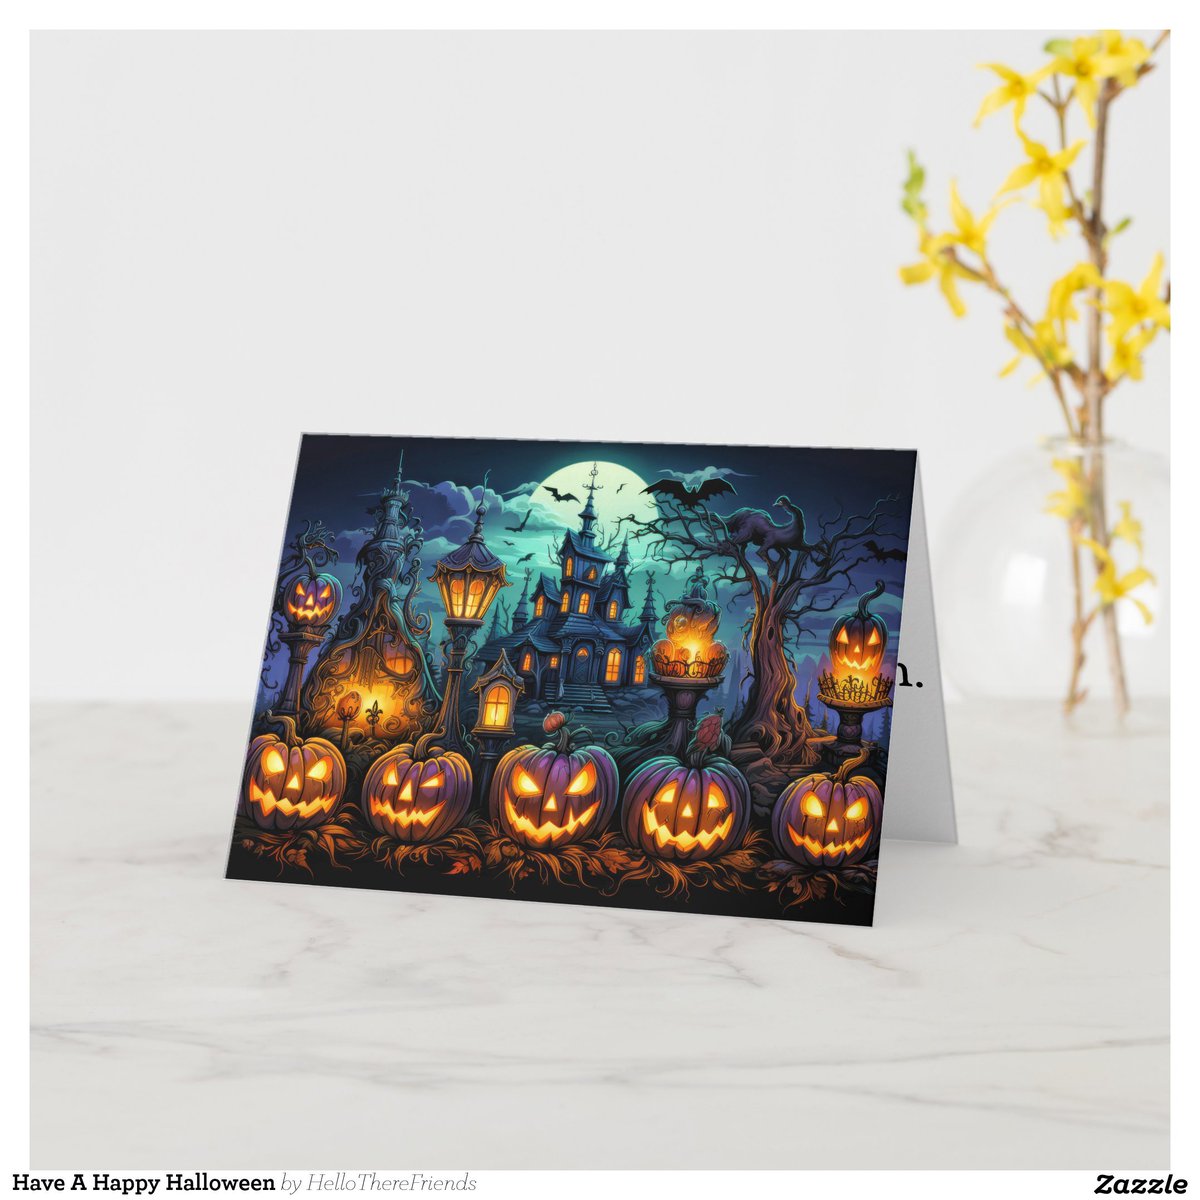 Have A Happy Halloween Card→zazzle.com/z/ahm8cd1a?rf=…

#GreetingCards #HalloweenCards #HappyHalloween #Pumpkins #Horror #HalloweenArt #TrickOrTreat #HauntedHouse #HappyHalloweenCards #Macabre